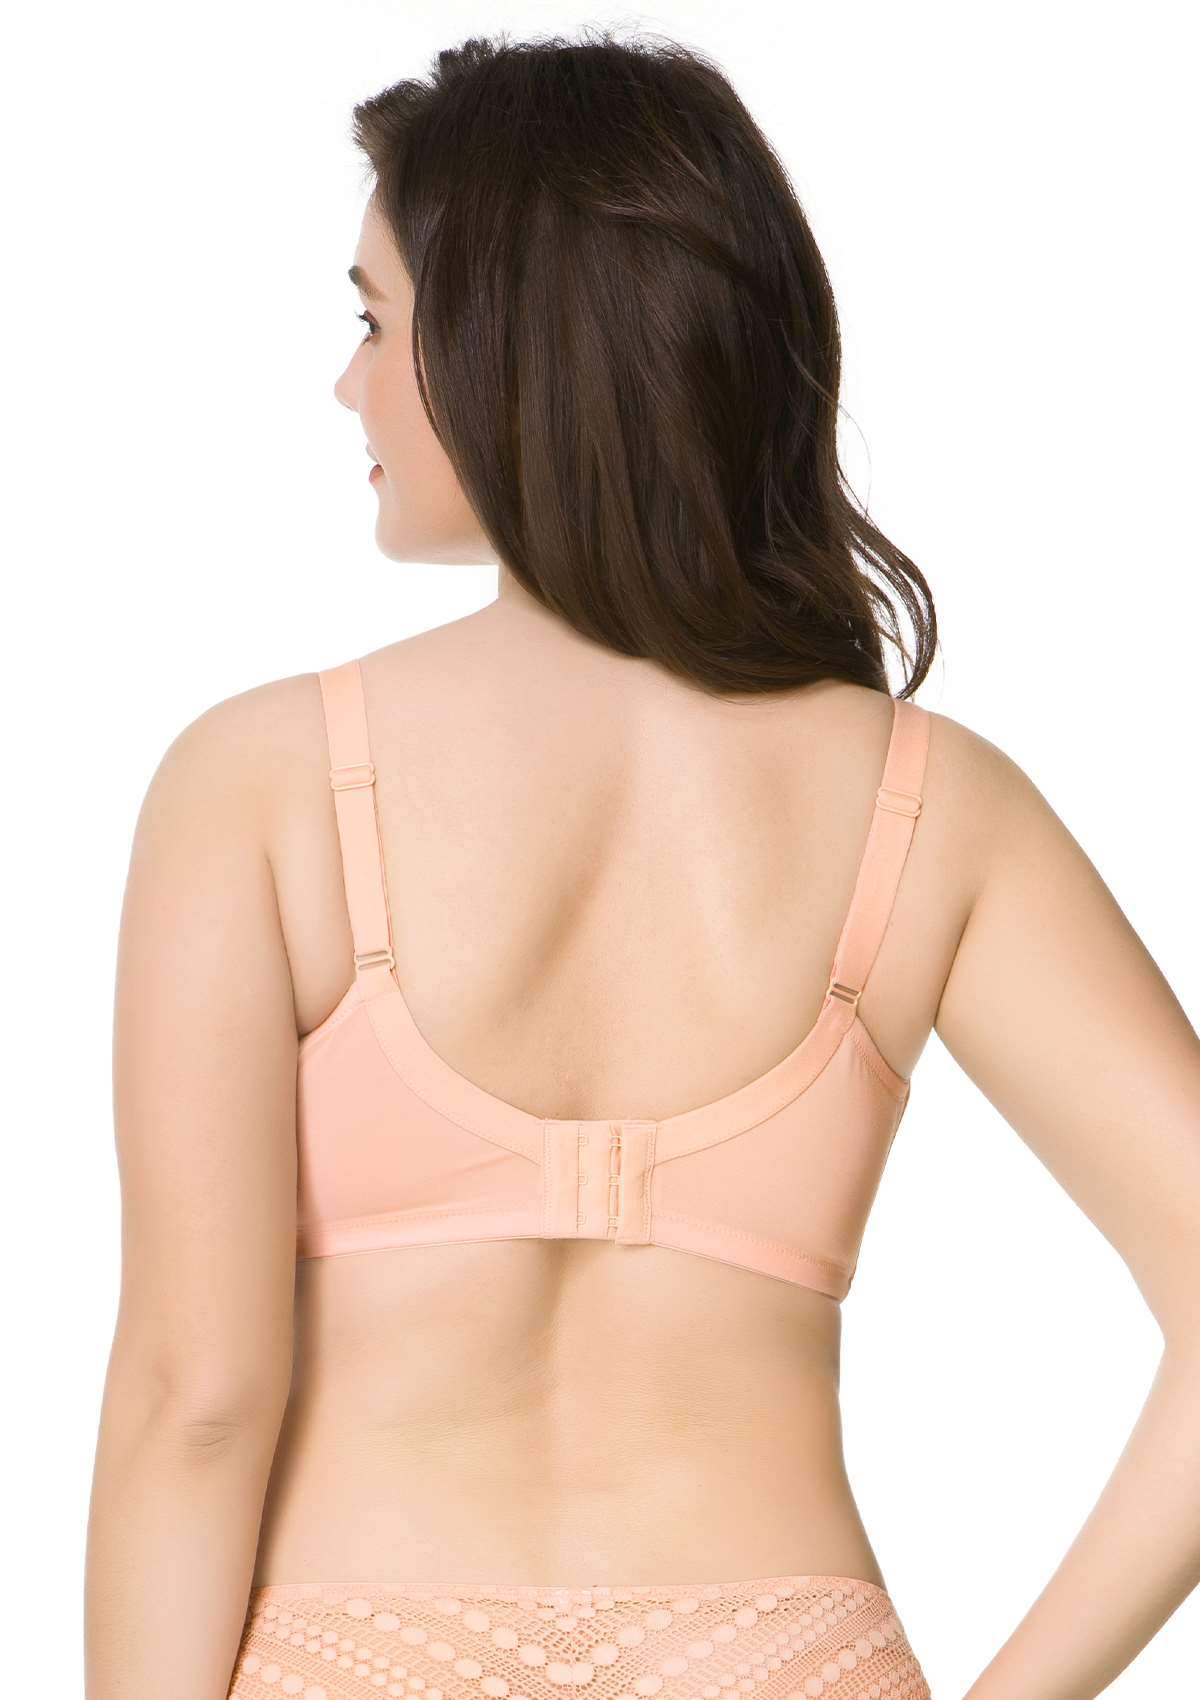 HSIA Heroine Lace Bra And Panty: Best Full Figure Minimizer Bra - Rose Cloud / 36 / C